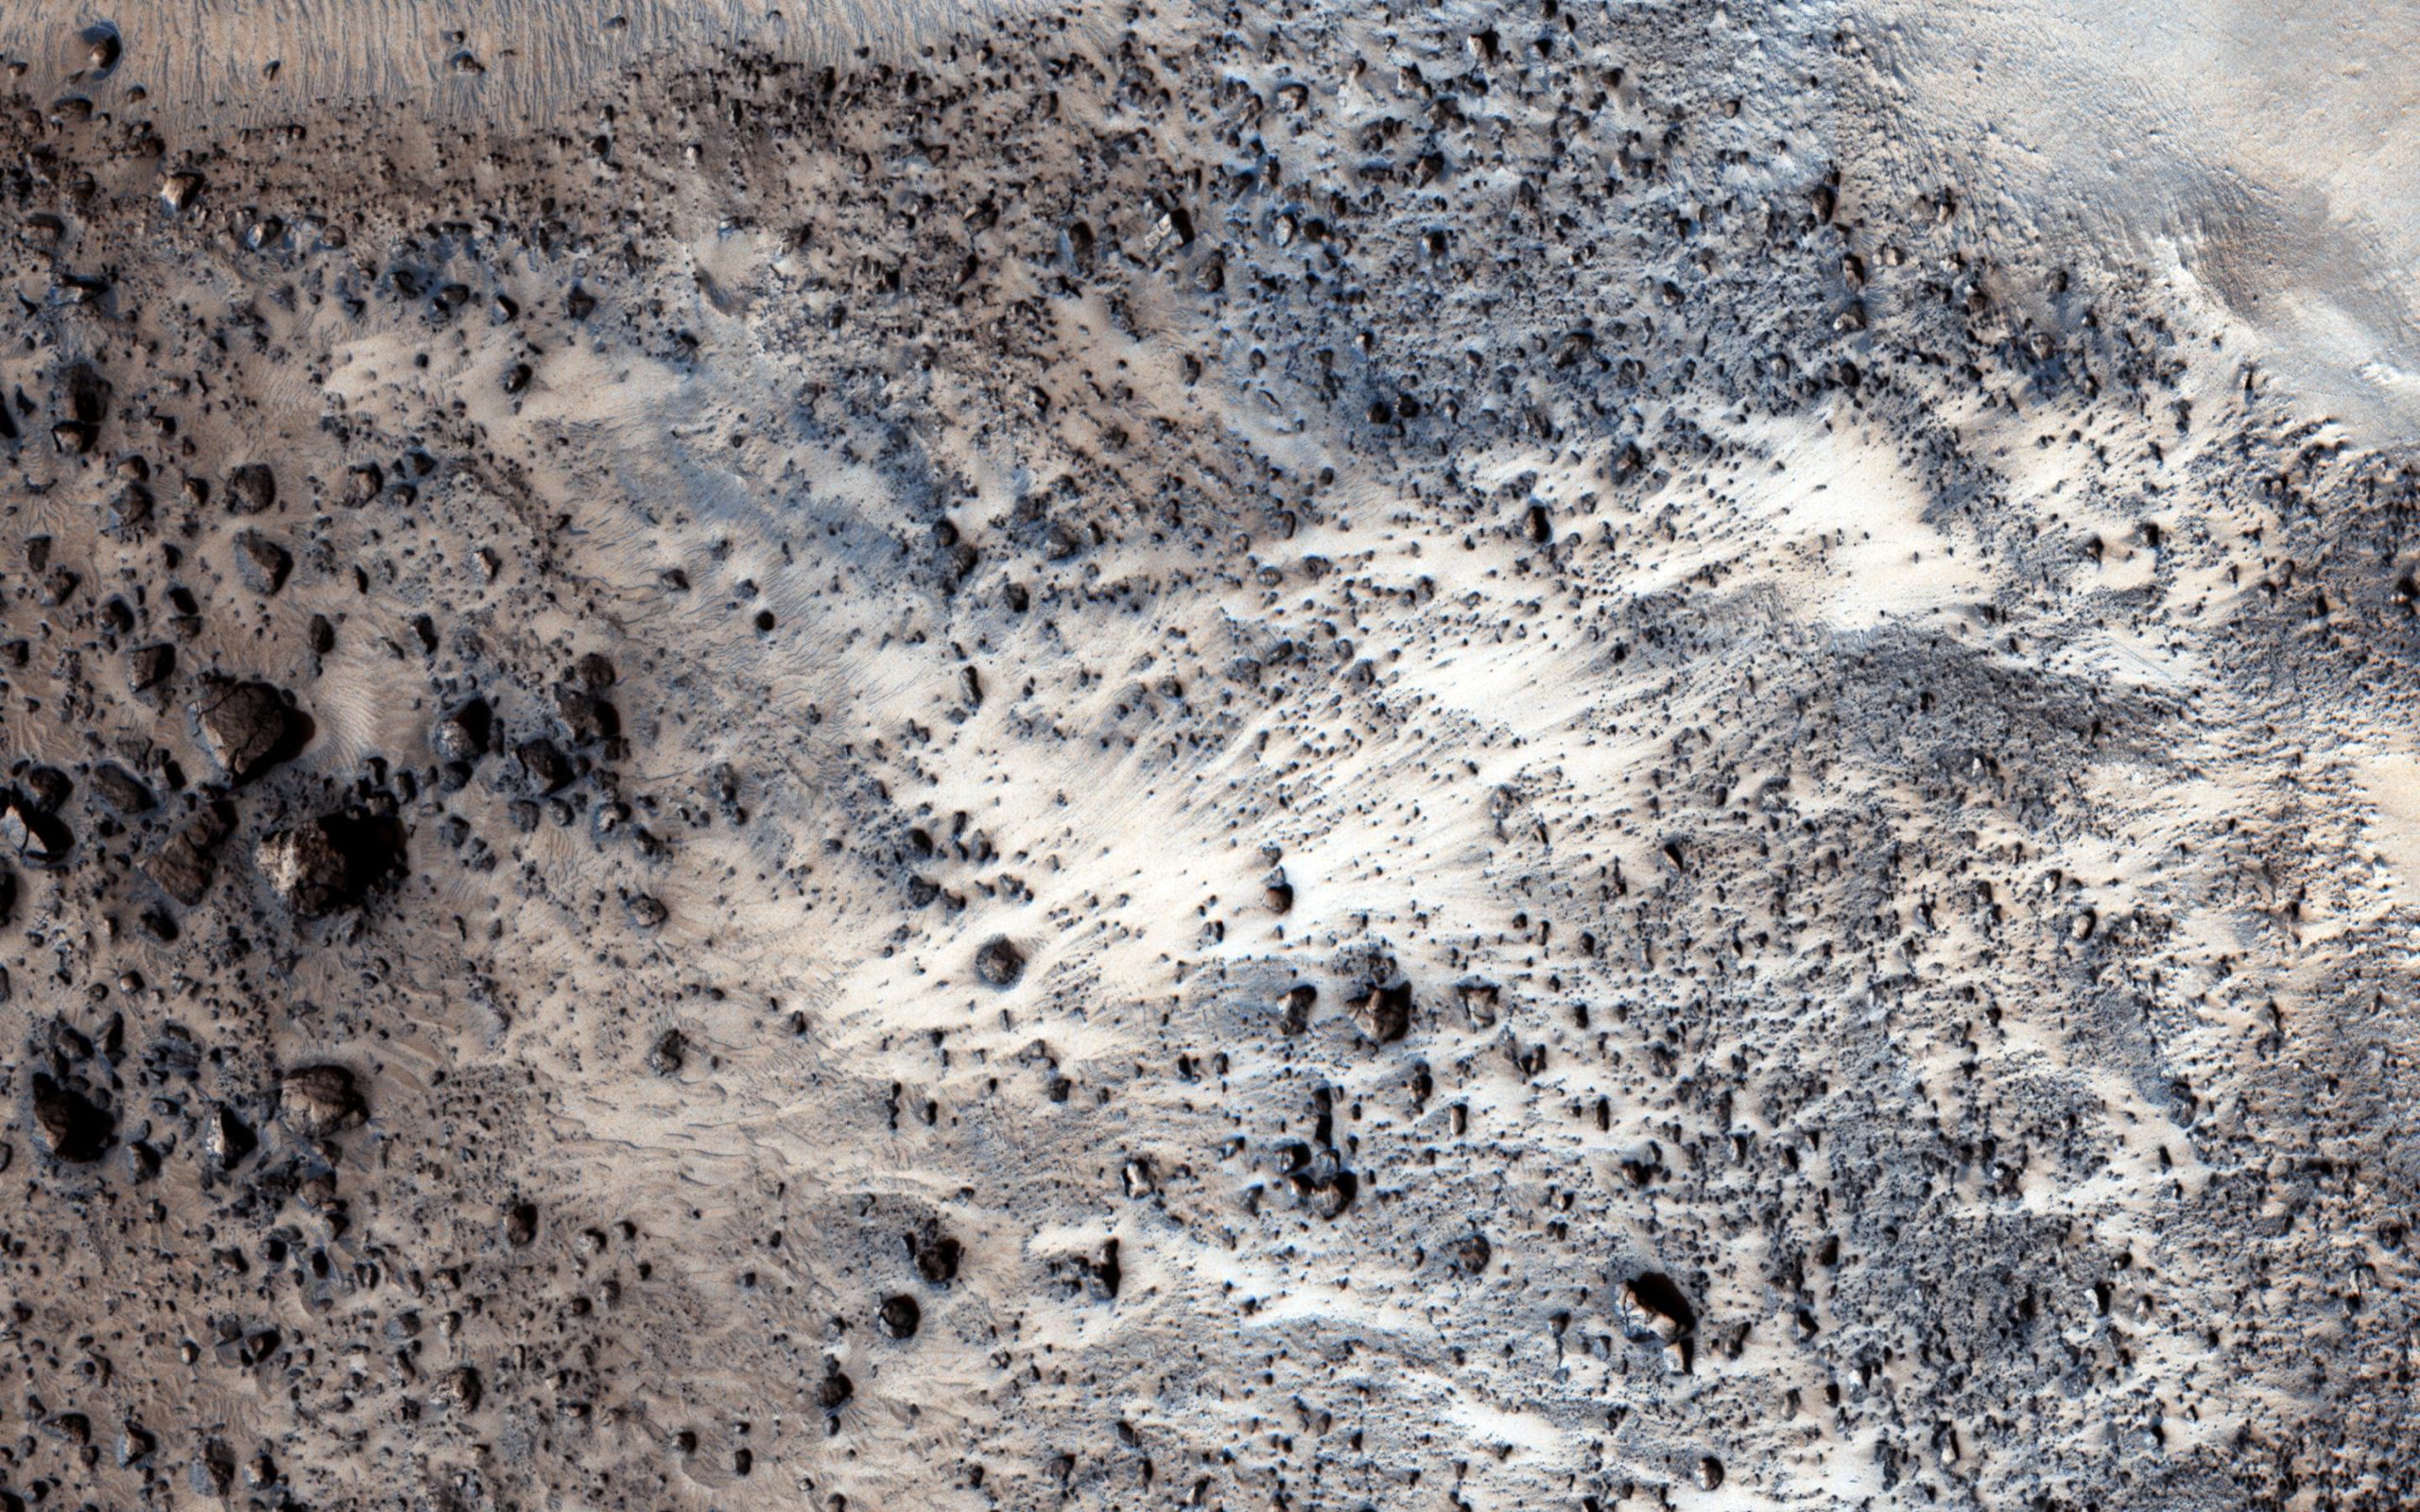 A martian landscape from orbit.